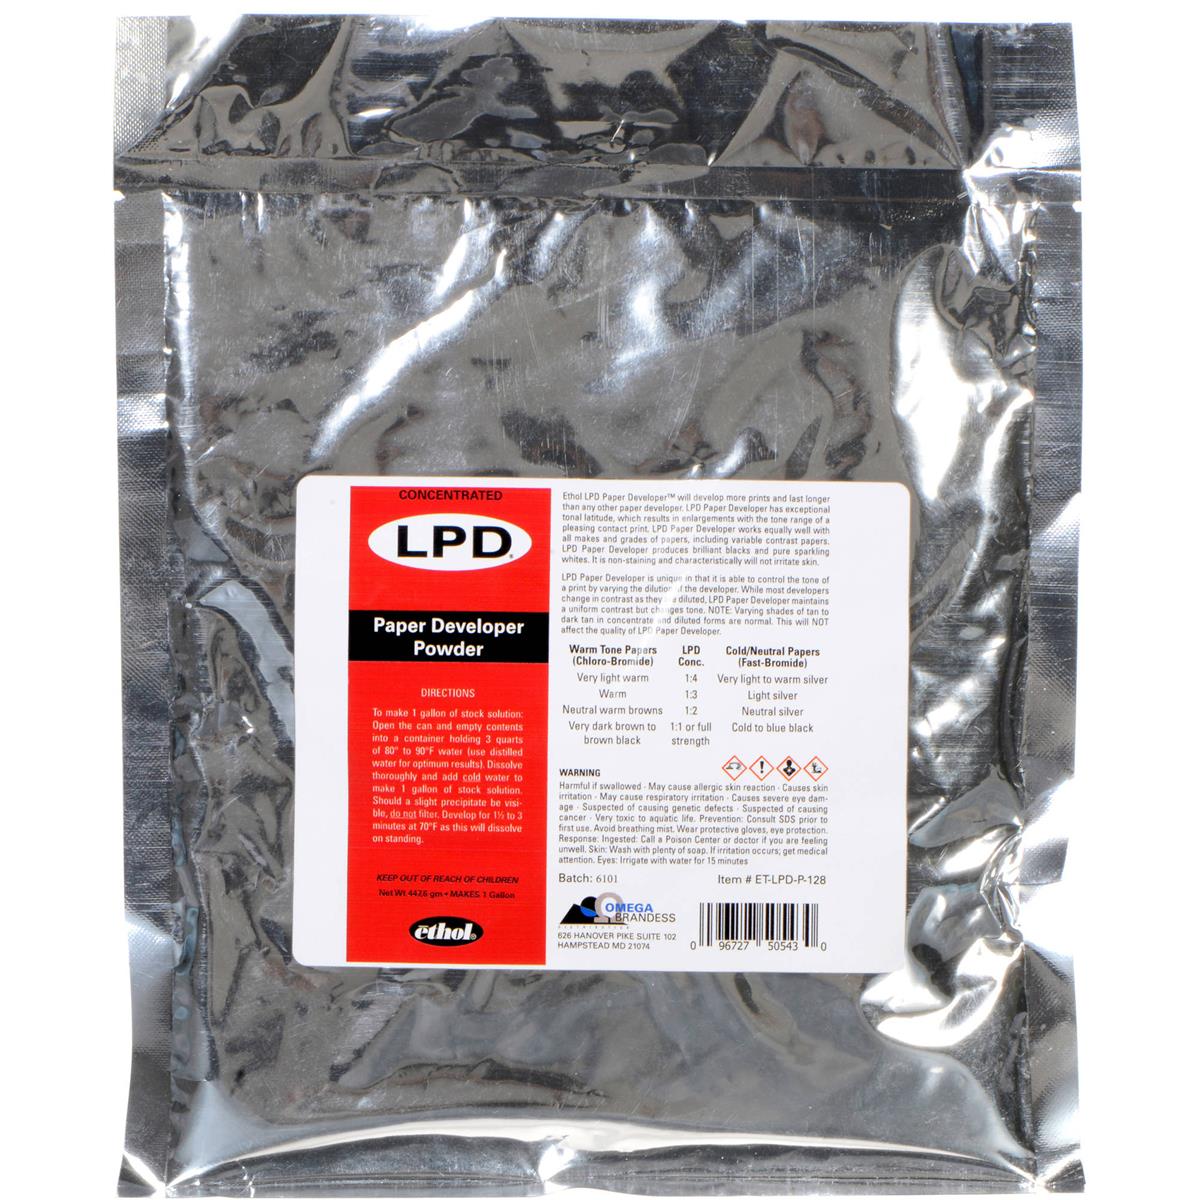 Ethol LPD Powder Black White Paper Developer, 1 галлон #ETLPDP128